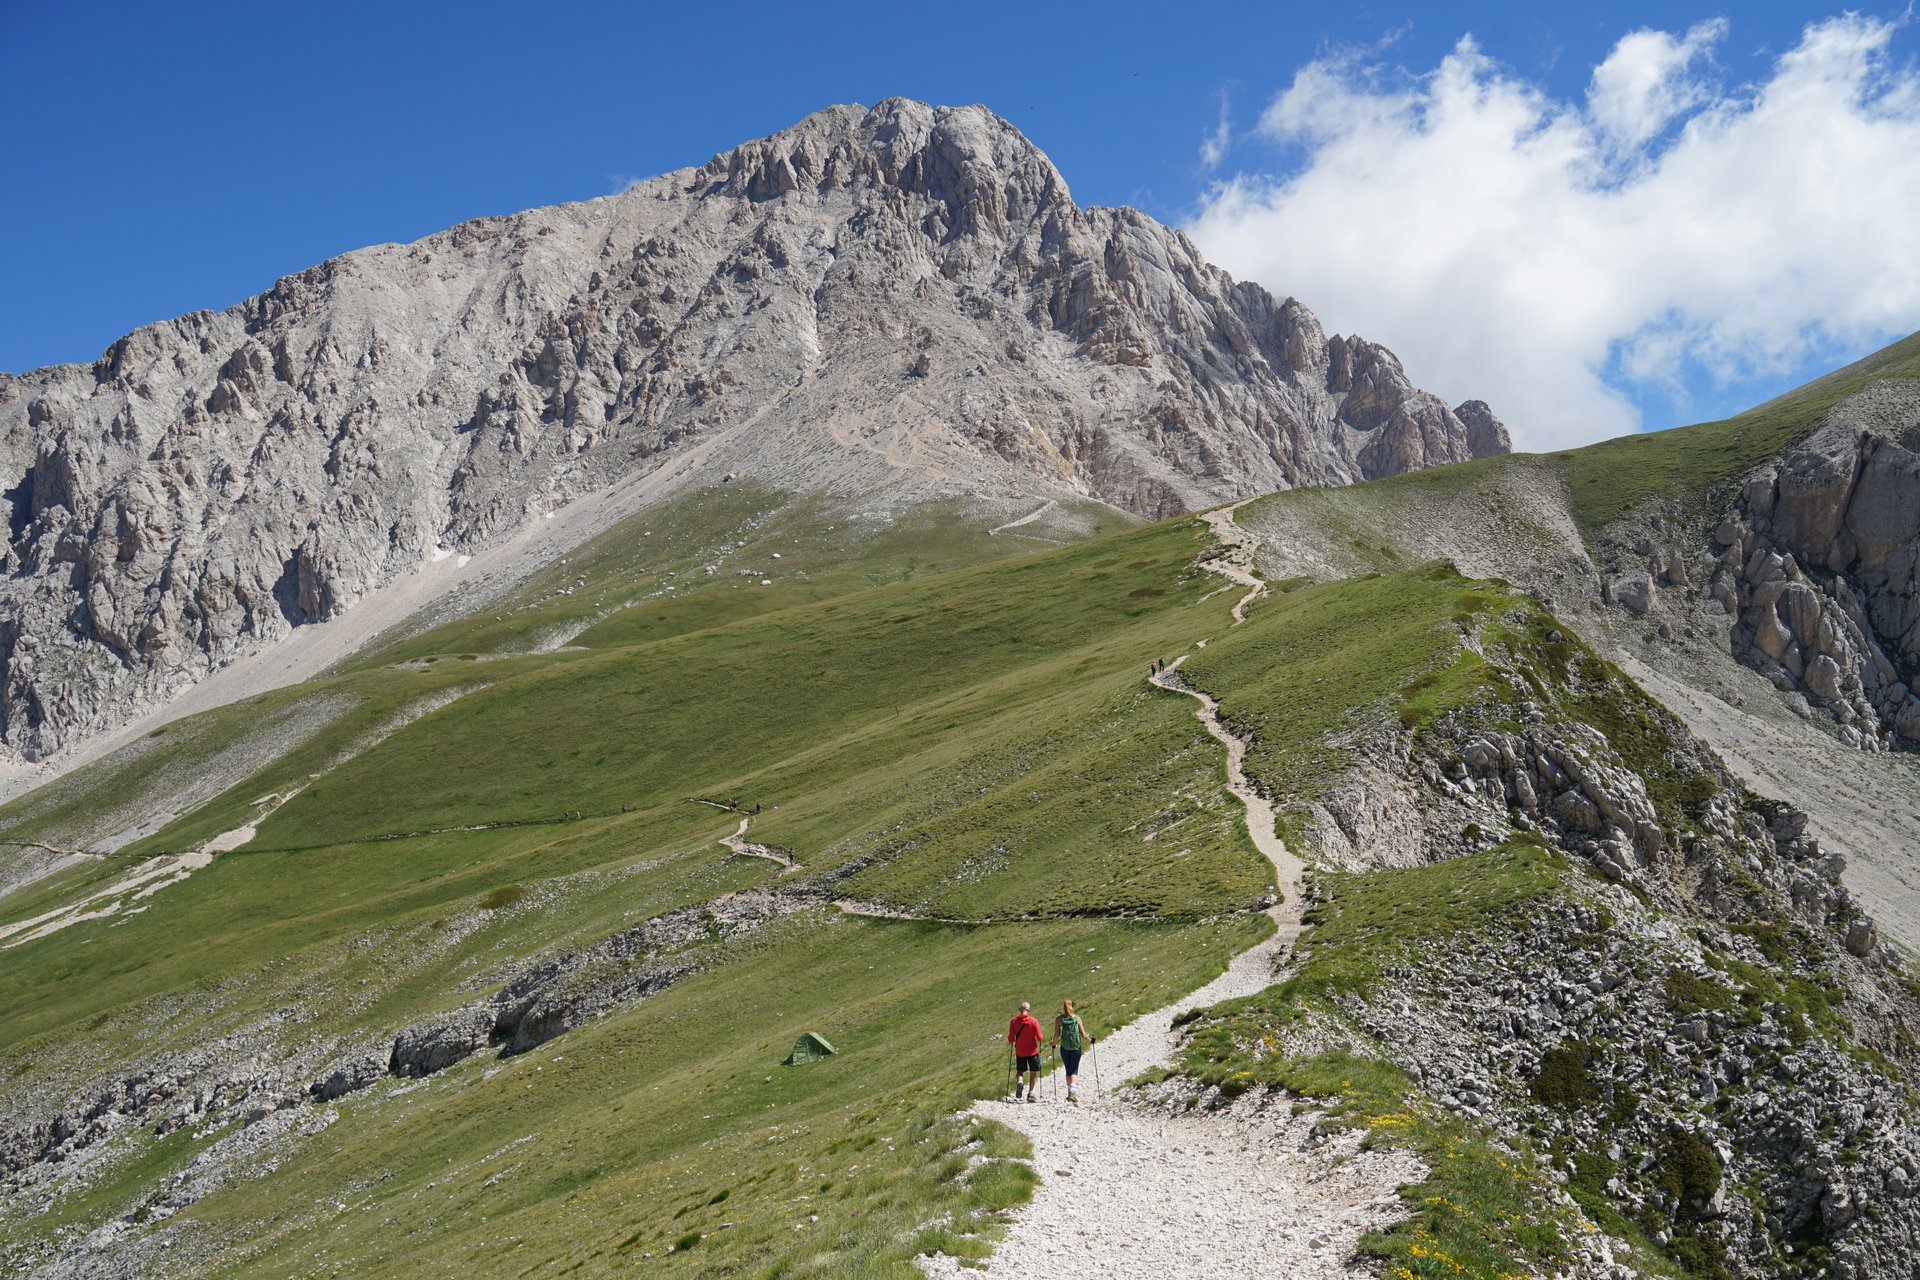 Corno Grande is the highest peak in the&nbsp;Apennine Mountains&nbsp;